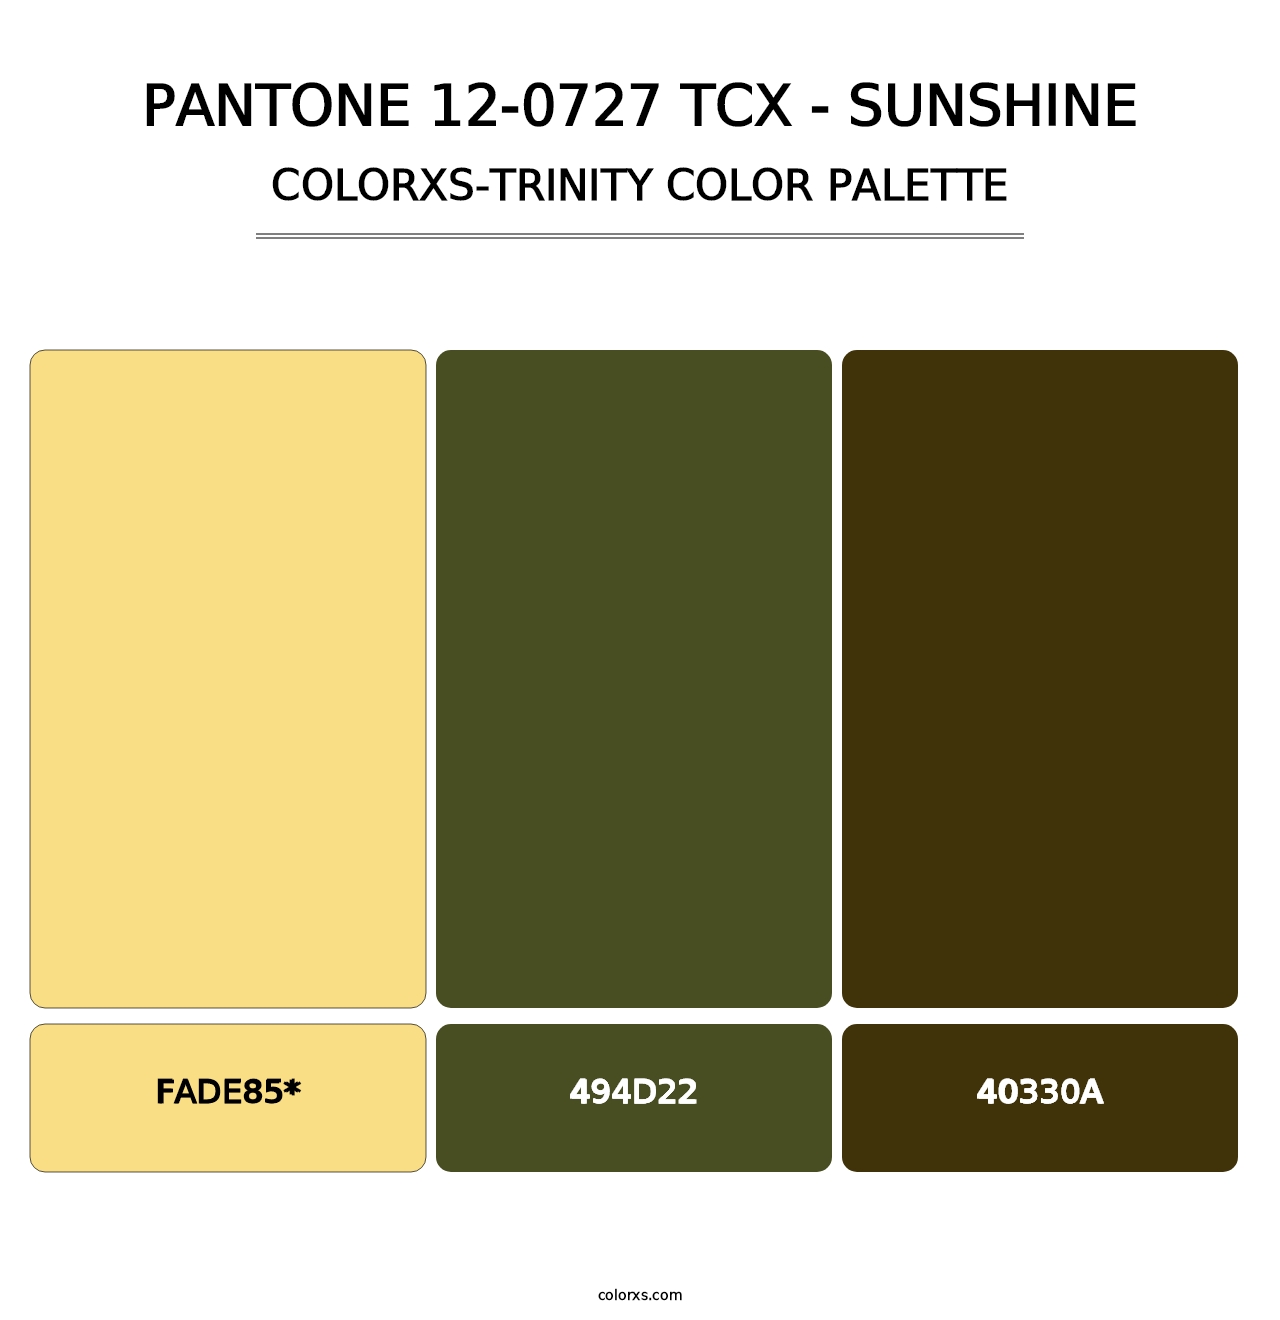 PANTONE 12-0727 TCX - Sunshine - Colorxs Trinity Palette